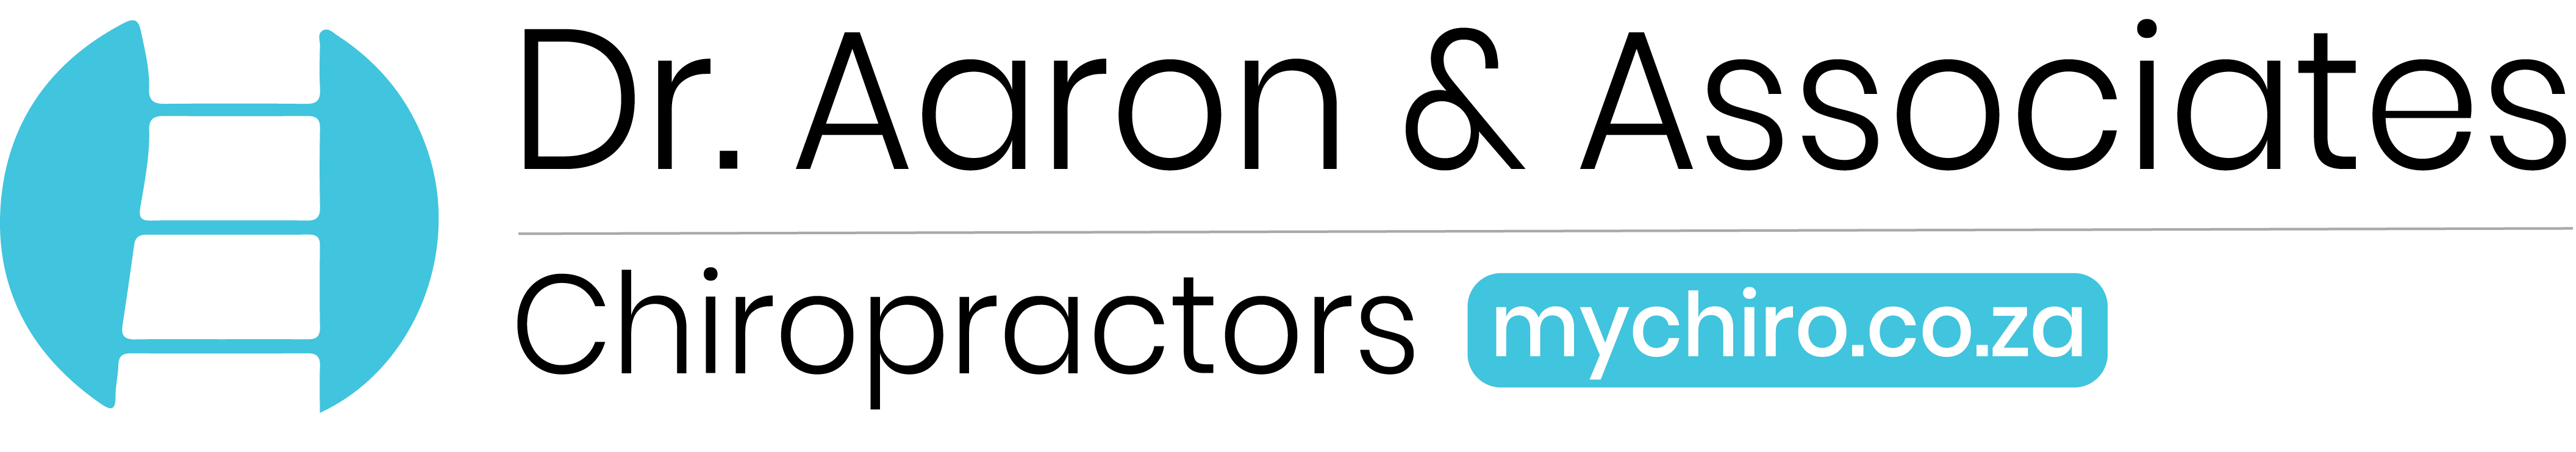 Dr. Aaron and Associates New descriptive and Informative Logo.